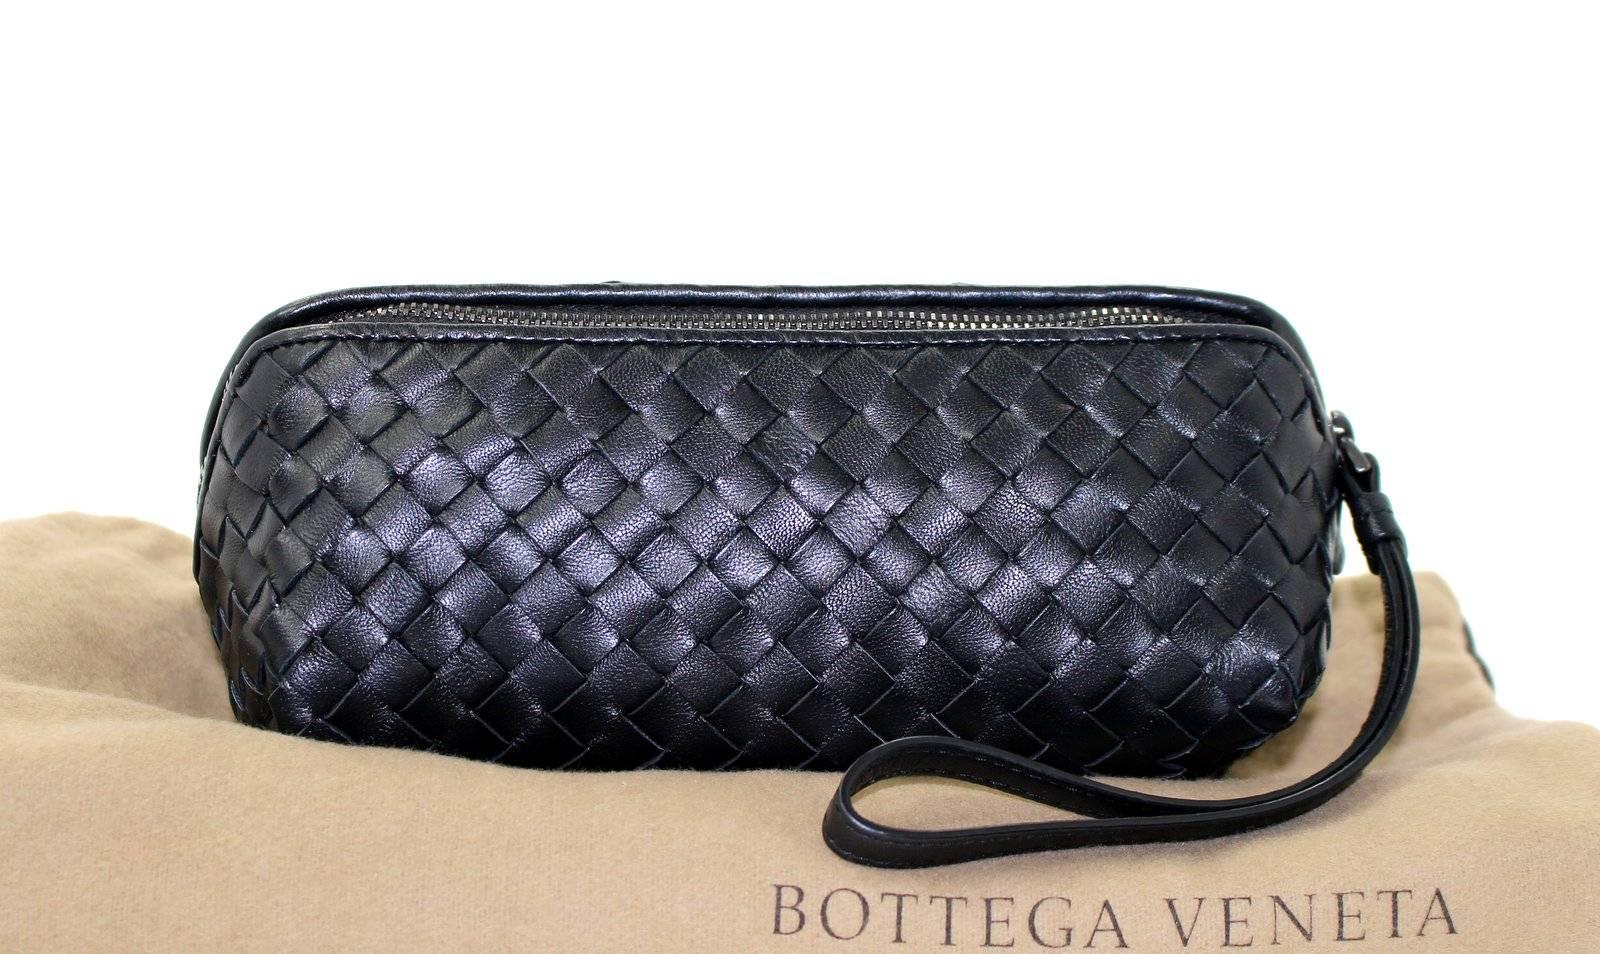 Bottega Veneta Black Intrcciato Leather Makeup Case 3